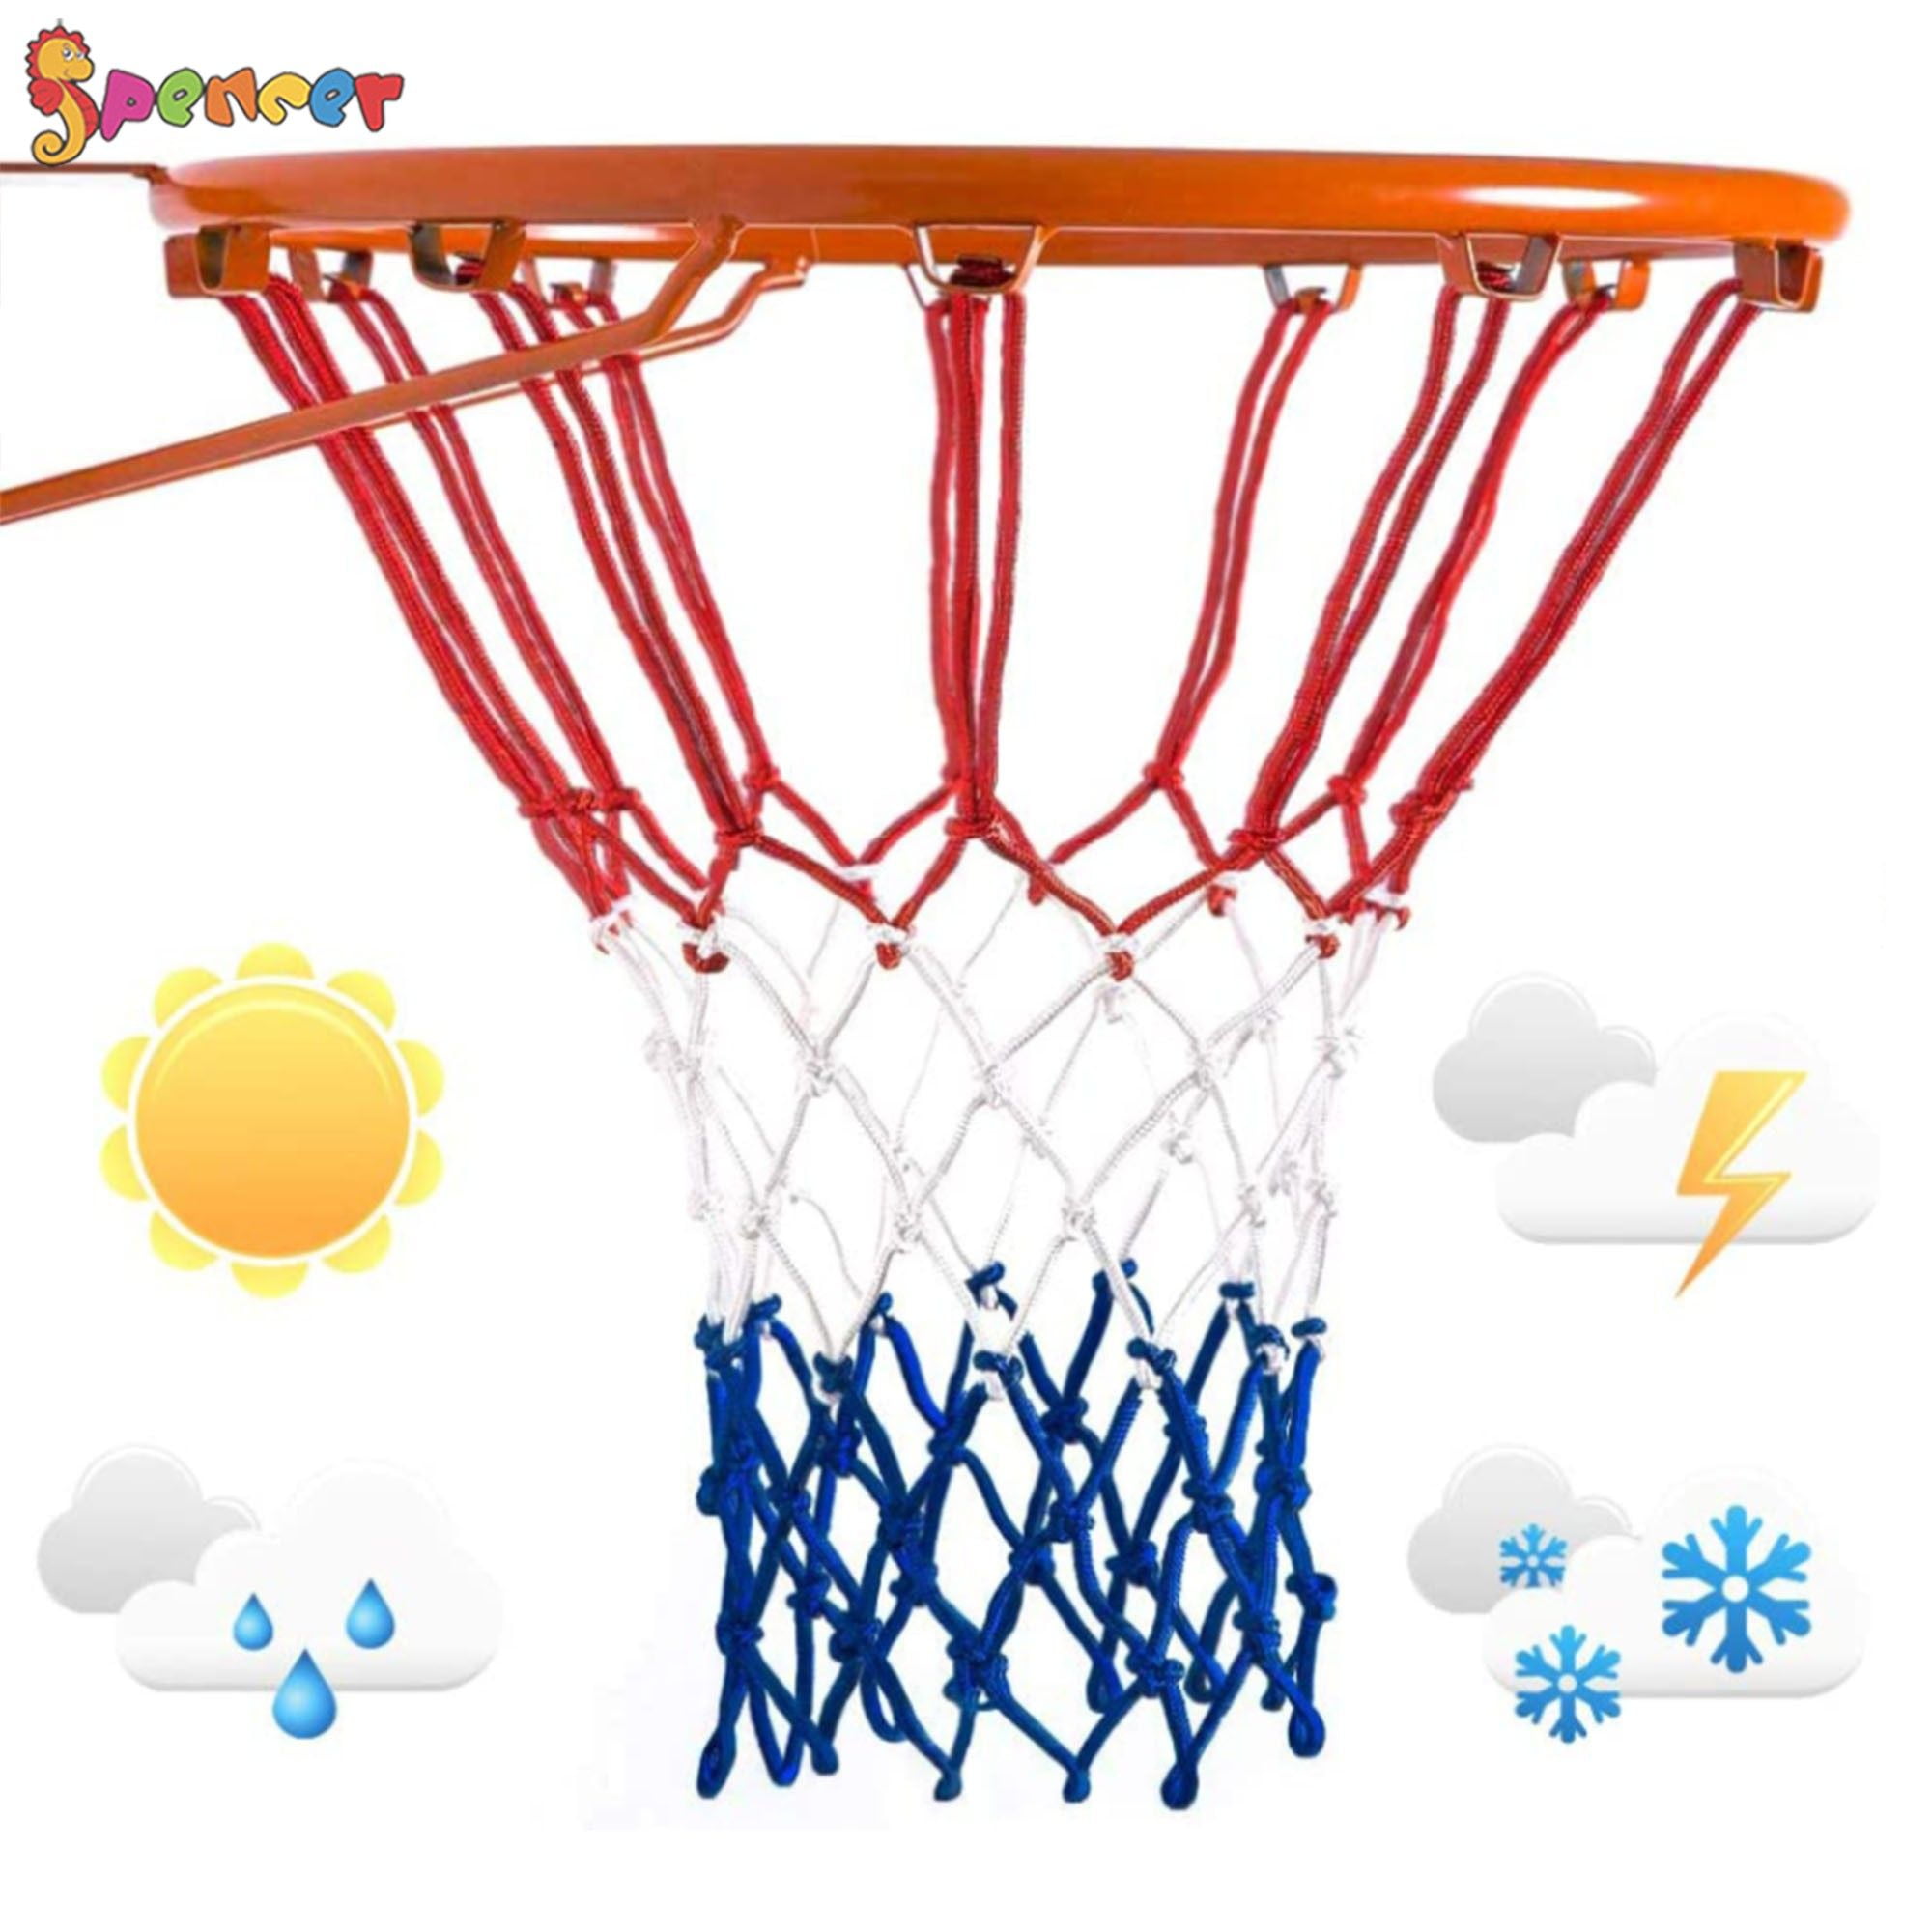 Hoop Thread Deluxe Fits standard size Basketball Net Mesh Net Durable Rugged